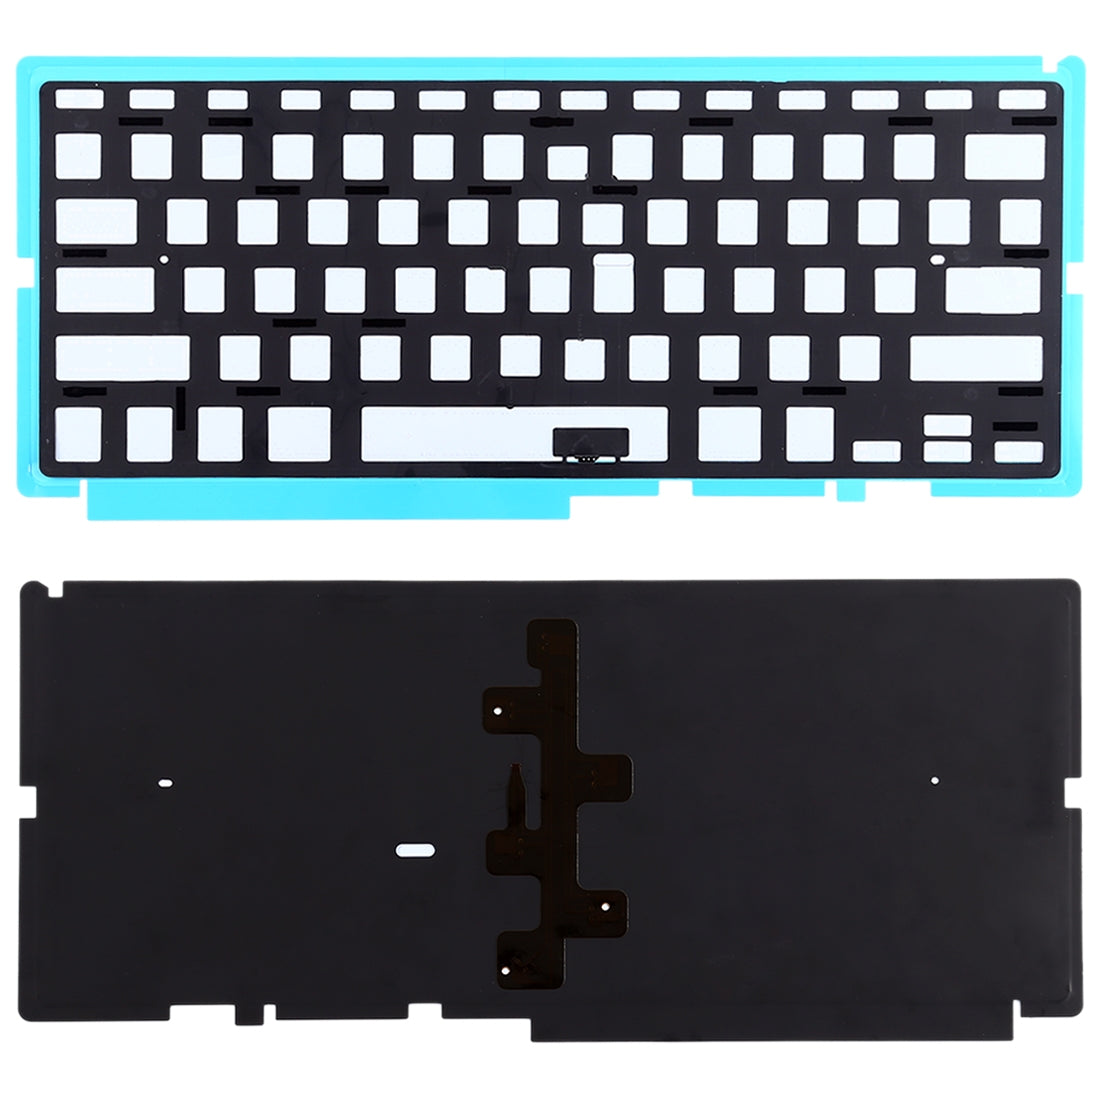 Backlight Keyboard US Version without ñ Apple MacBook Pro 15.4 A1286